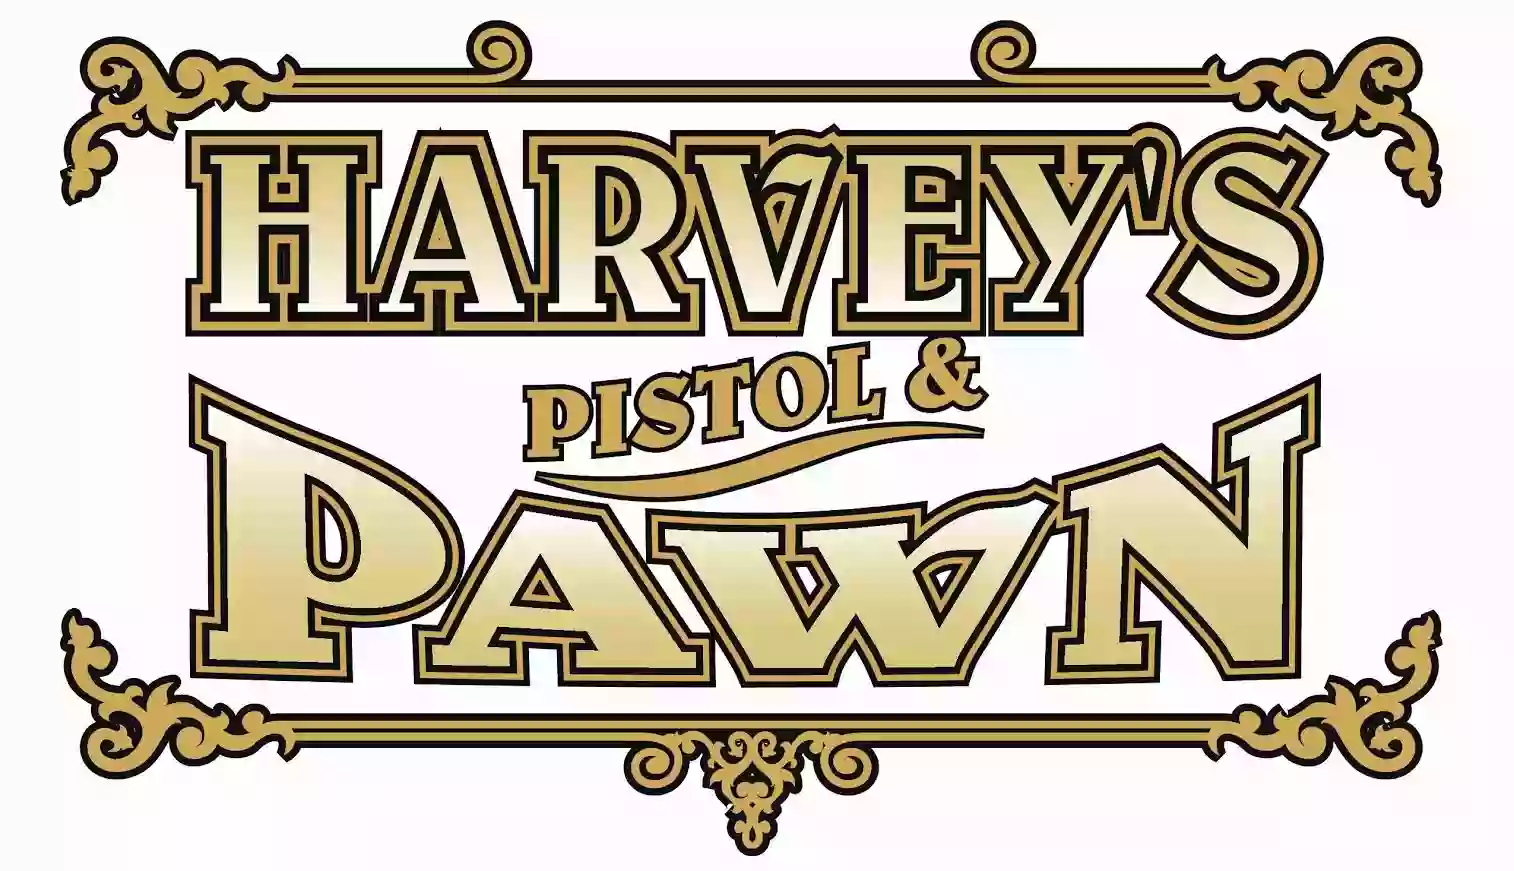 Harveys Pistol & Pawn, LLC.